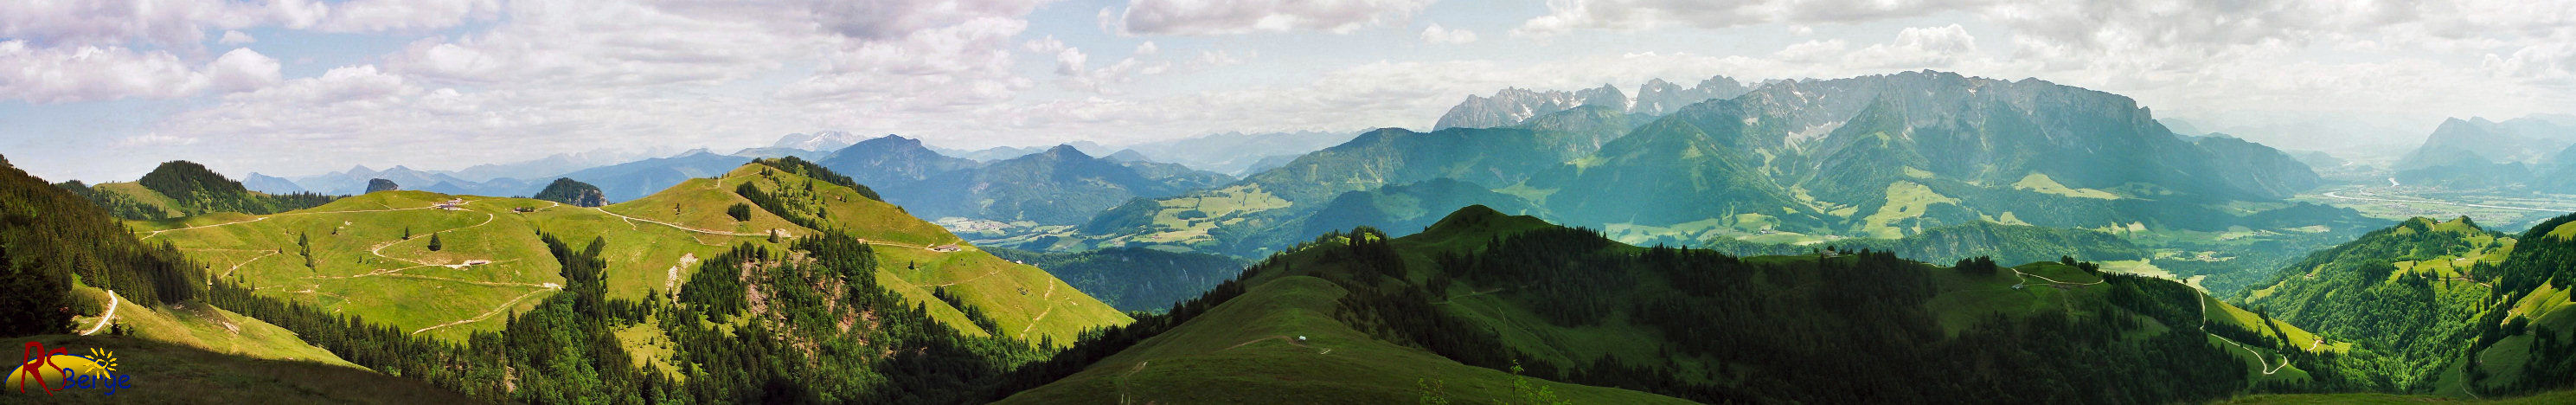 Wanderung 127 Wandberg: Panorama am Gipfel